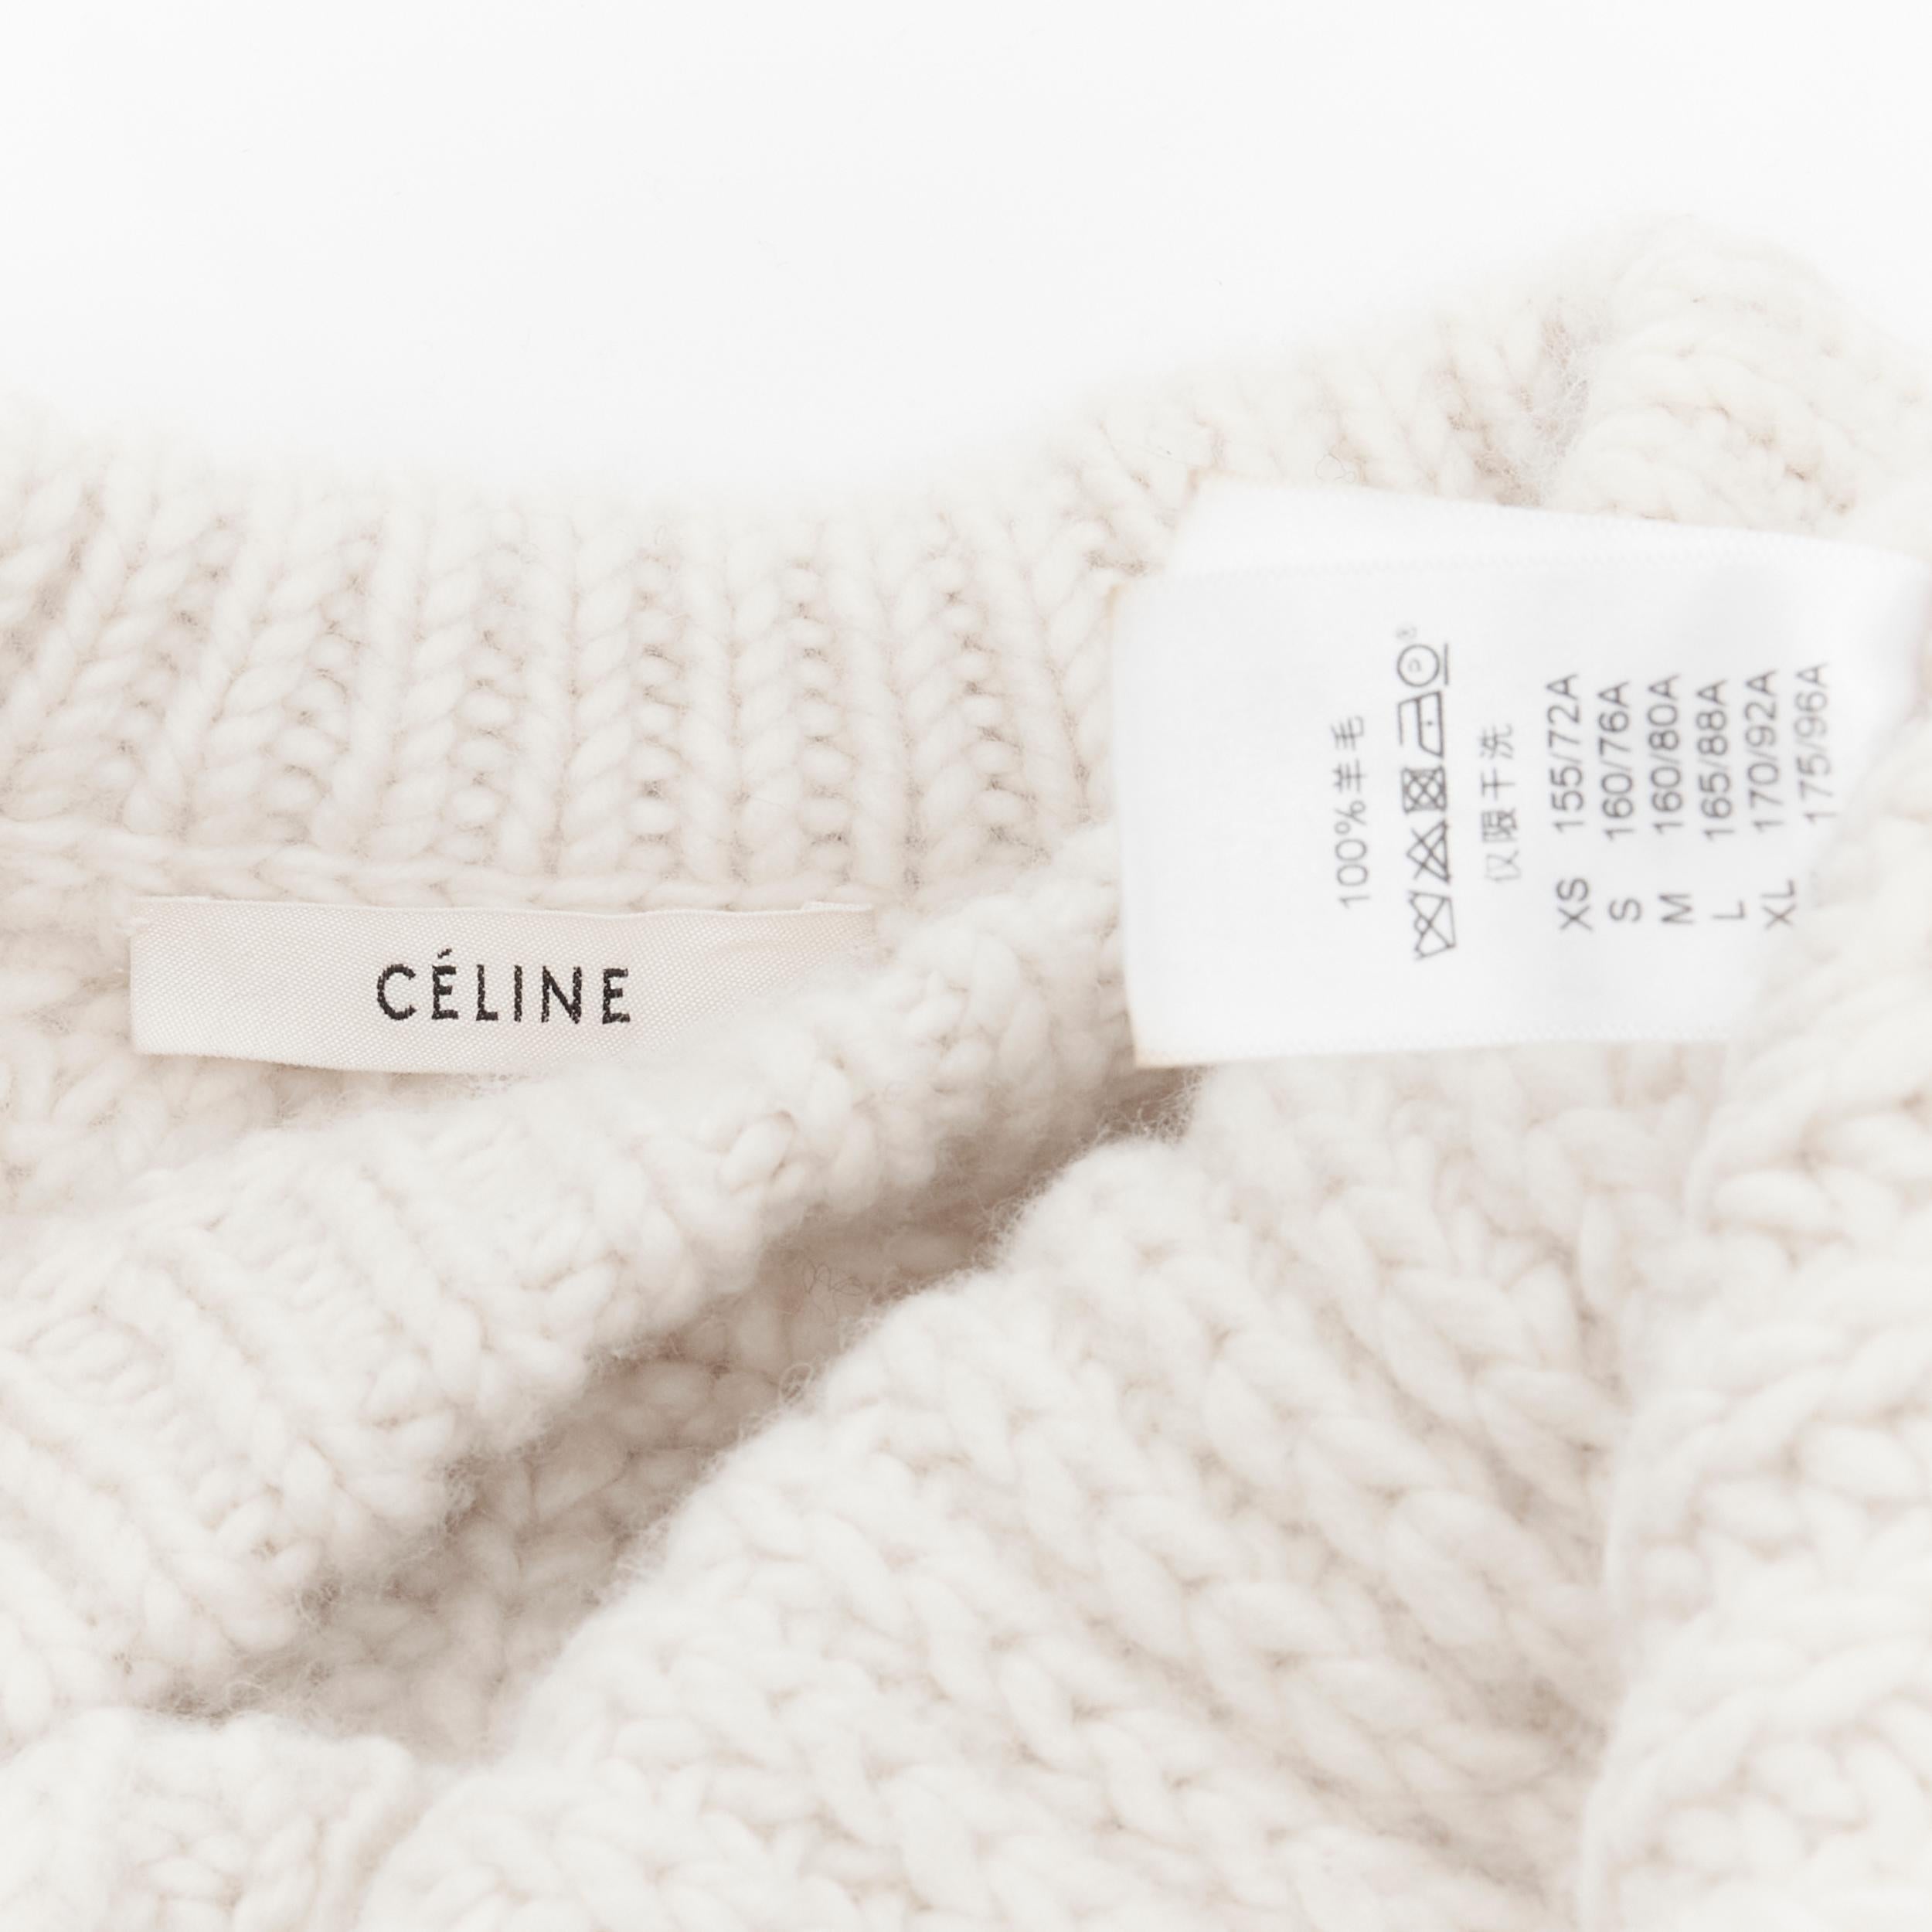 OLD CELINE Phoebe Philo heavy knit wool cuffed sleeve cropped sweater XS 3